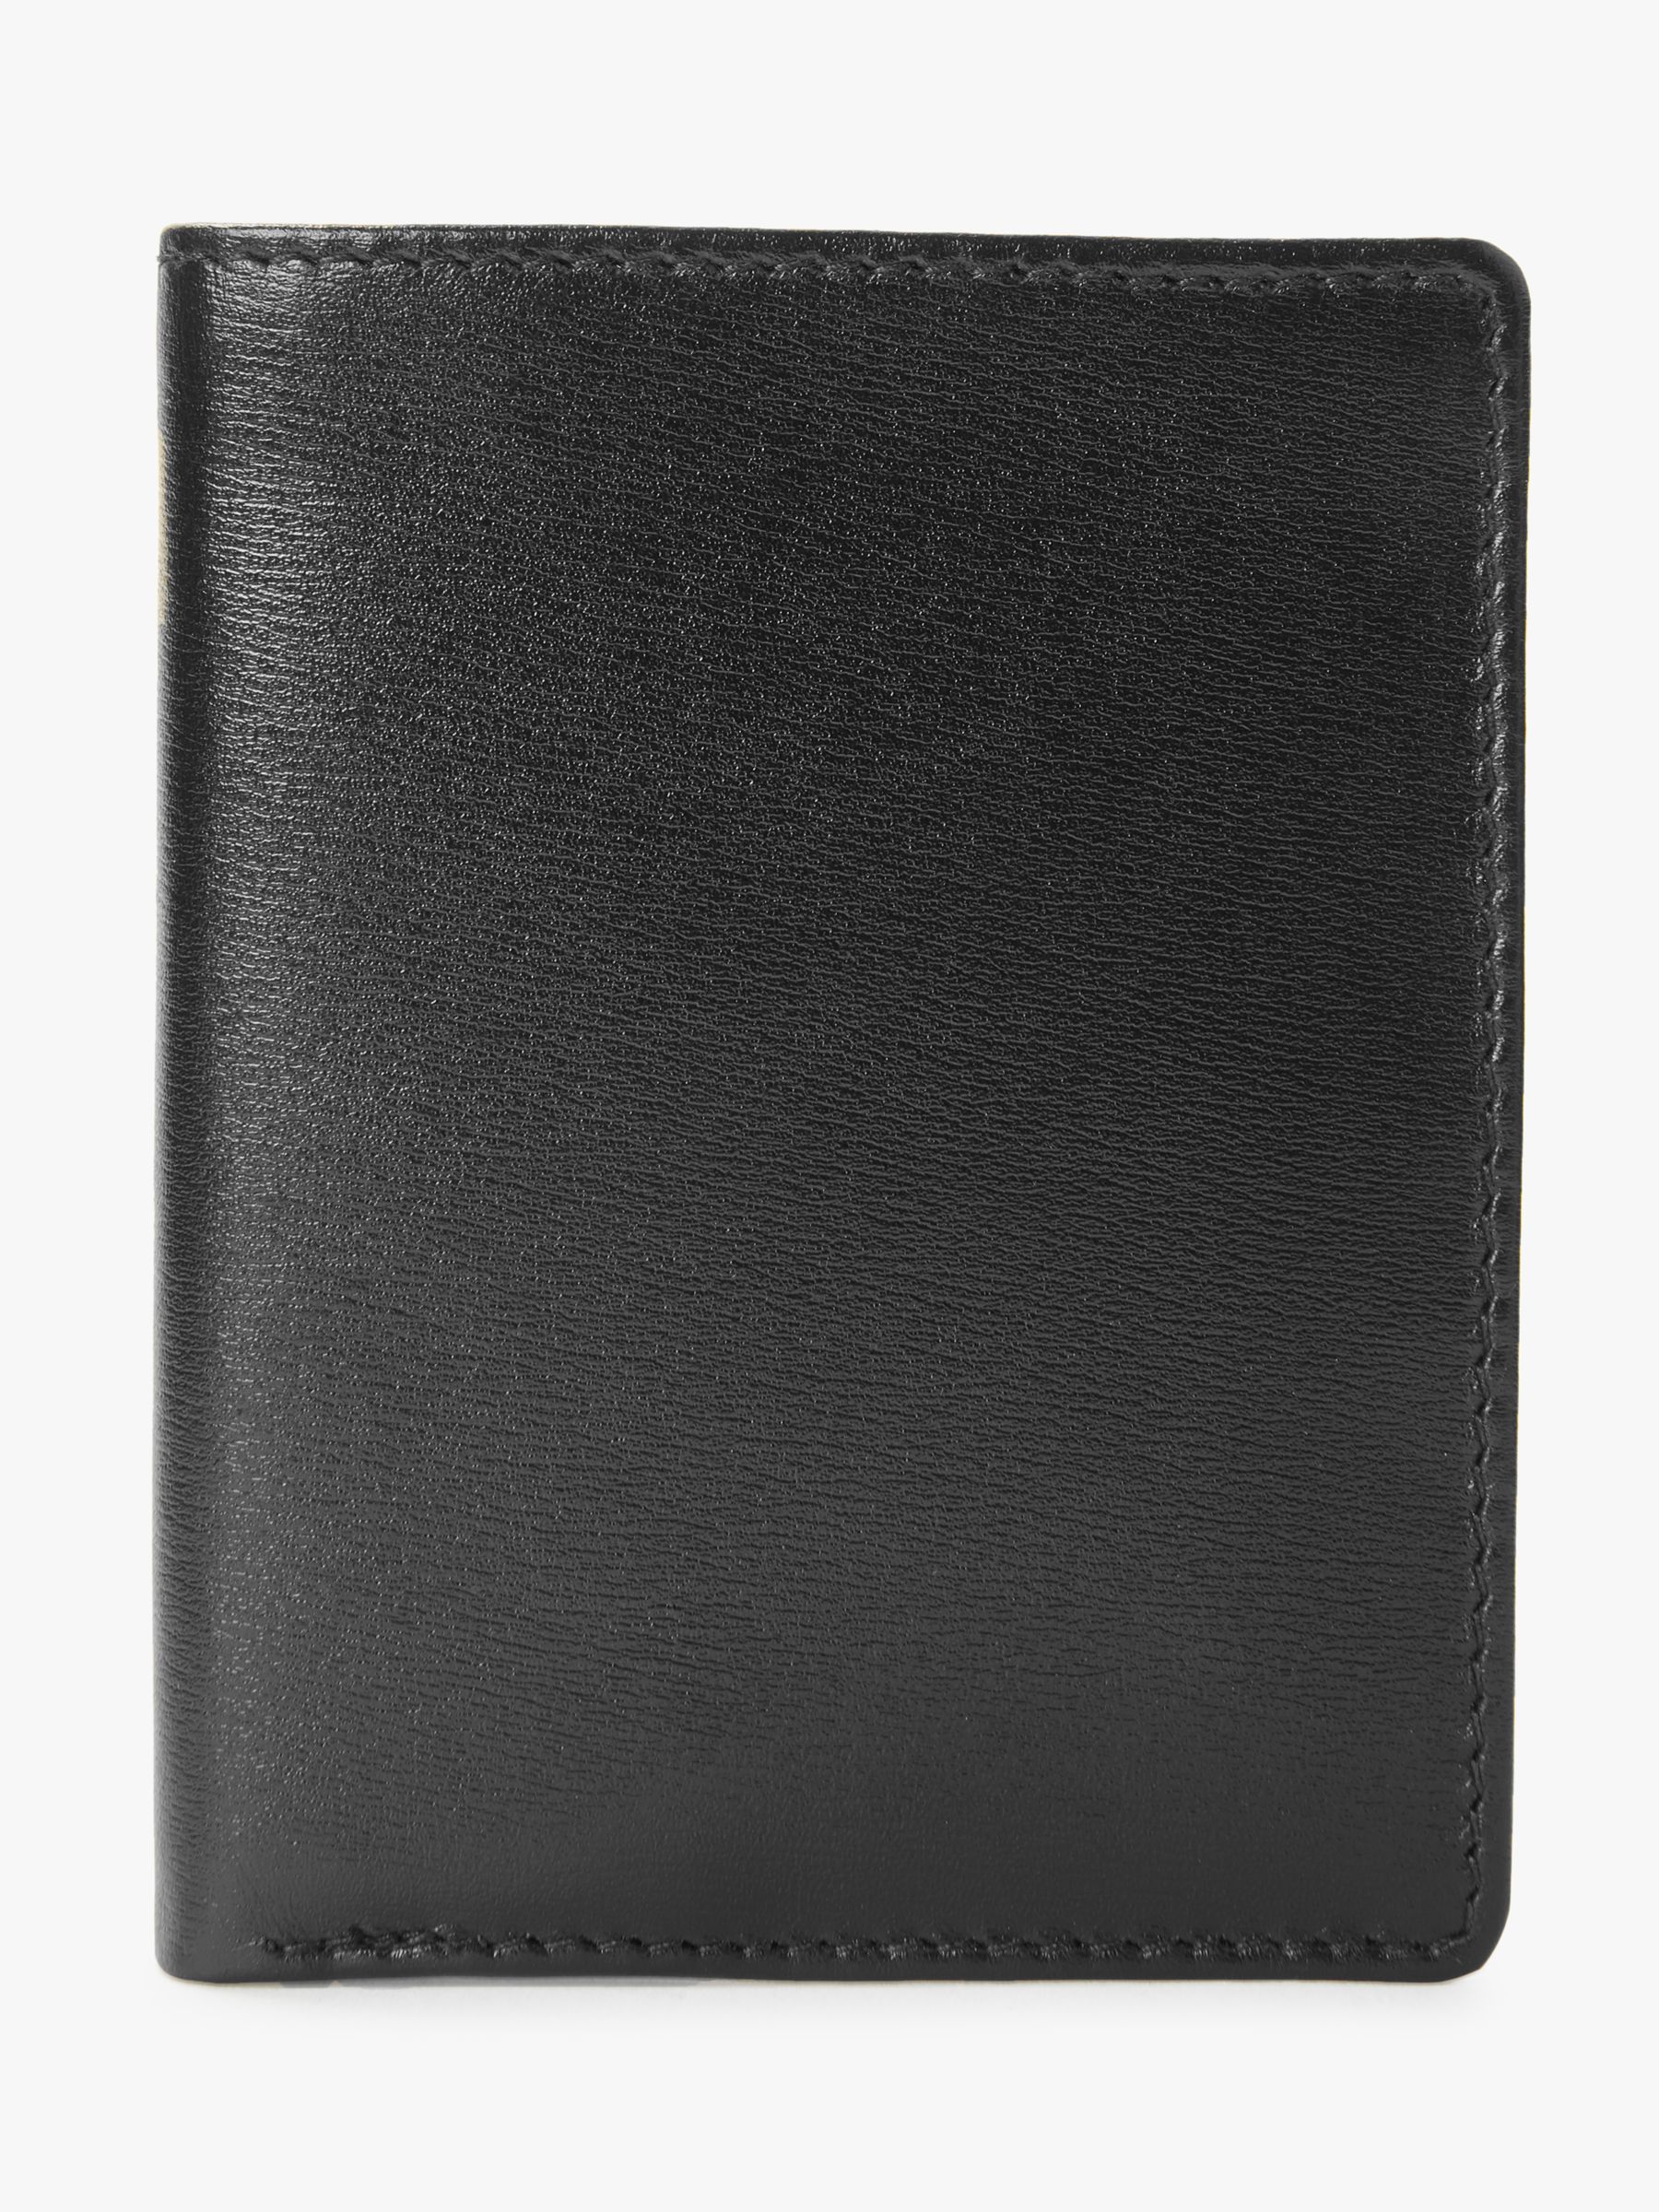 Launer Leather Six Credit Card Case, Ebony Black/Scarlet